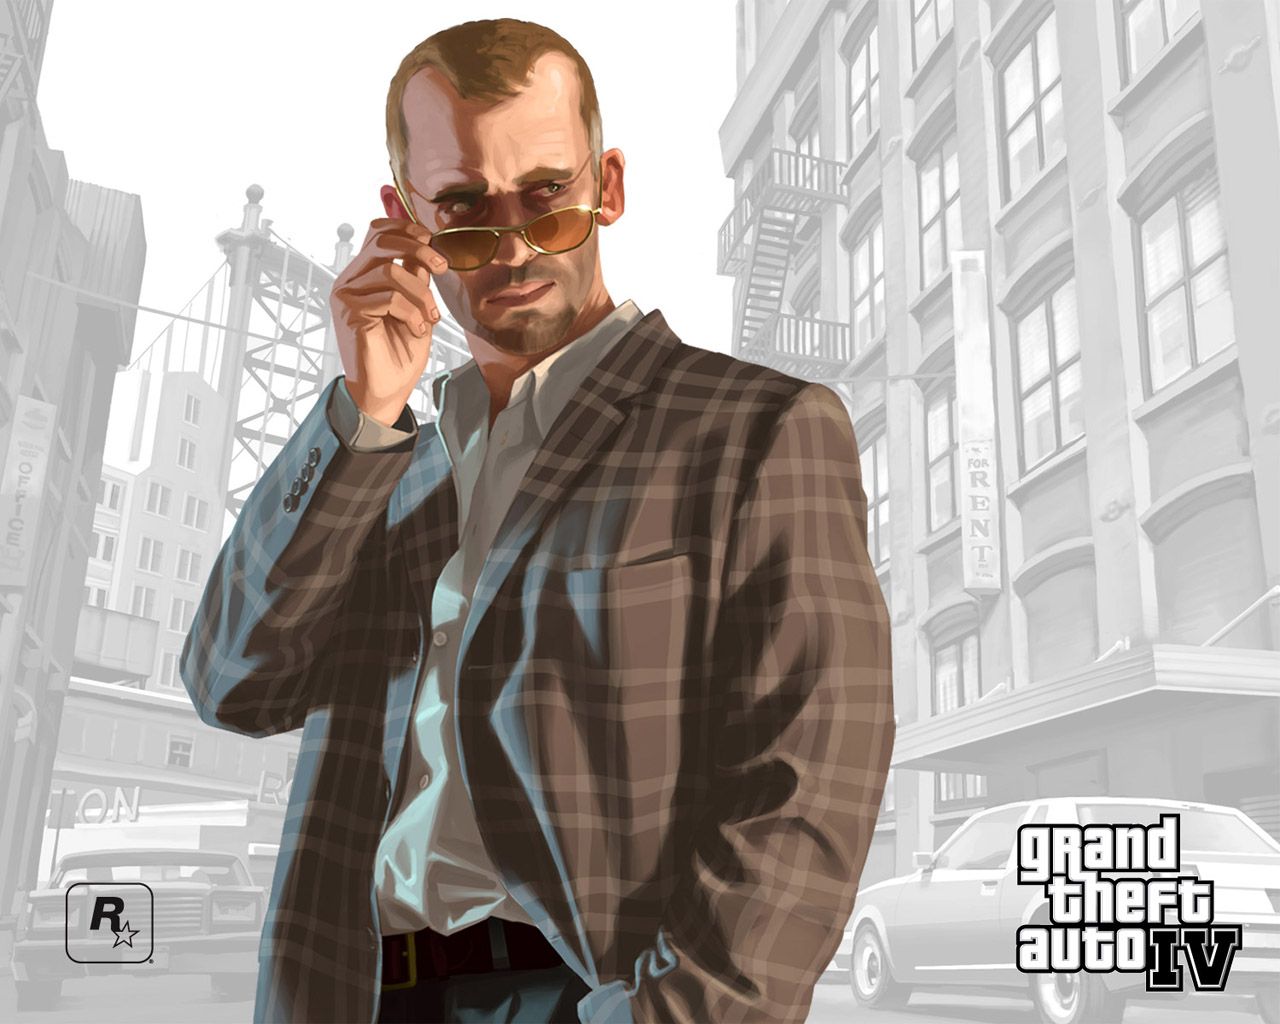 grand theft auto iv. Grand Theft Auto 4 Wallpaper. Grand theft